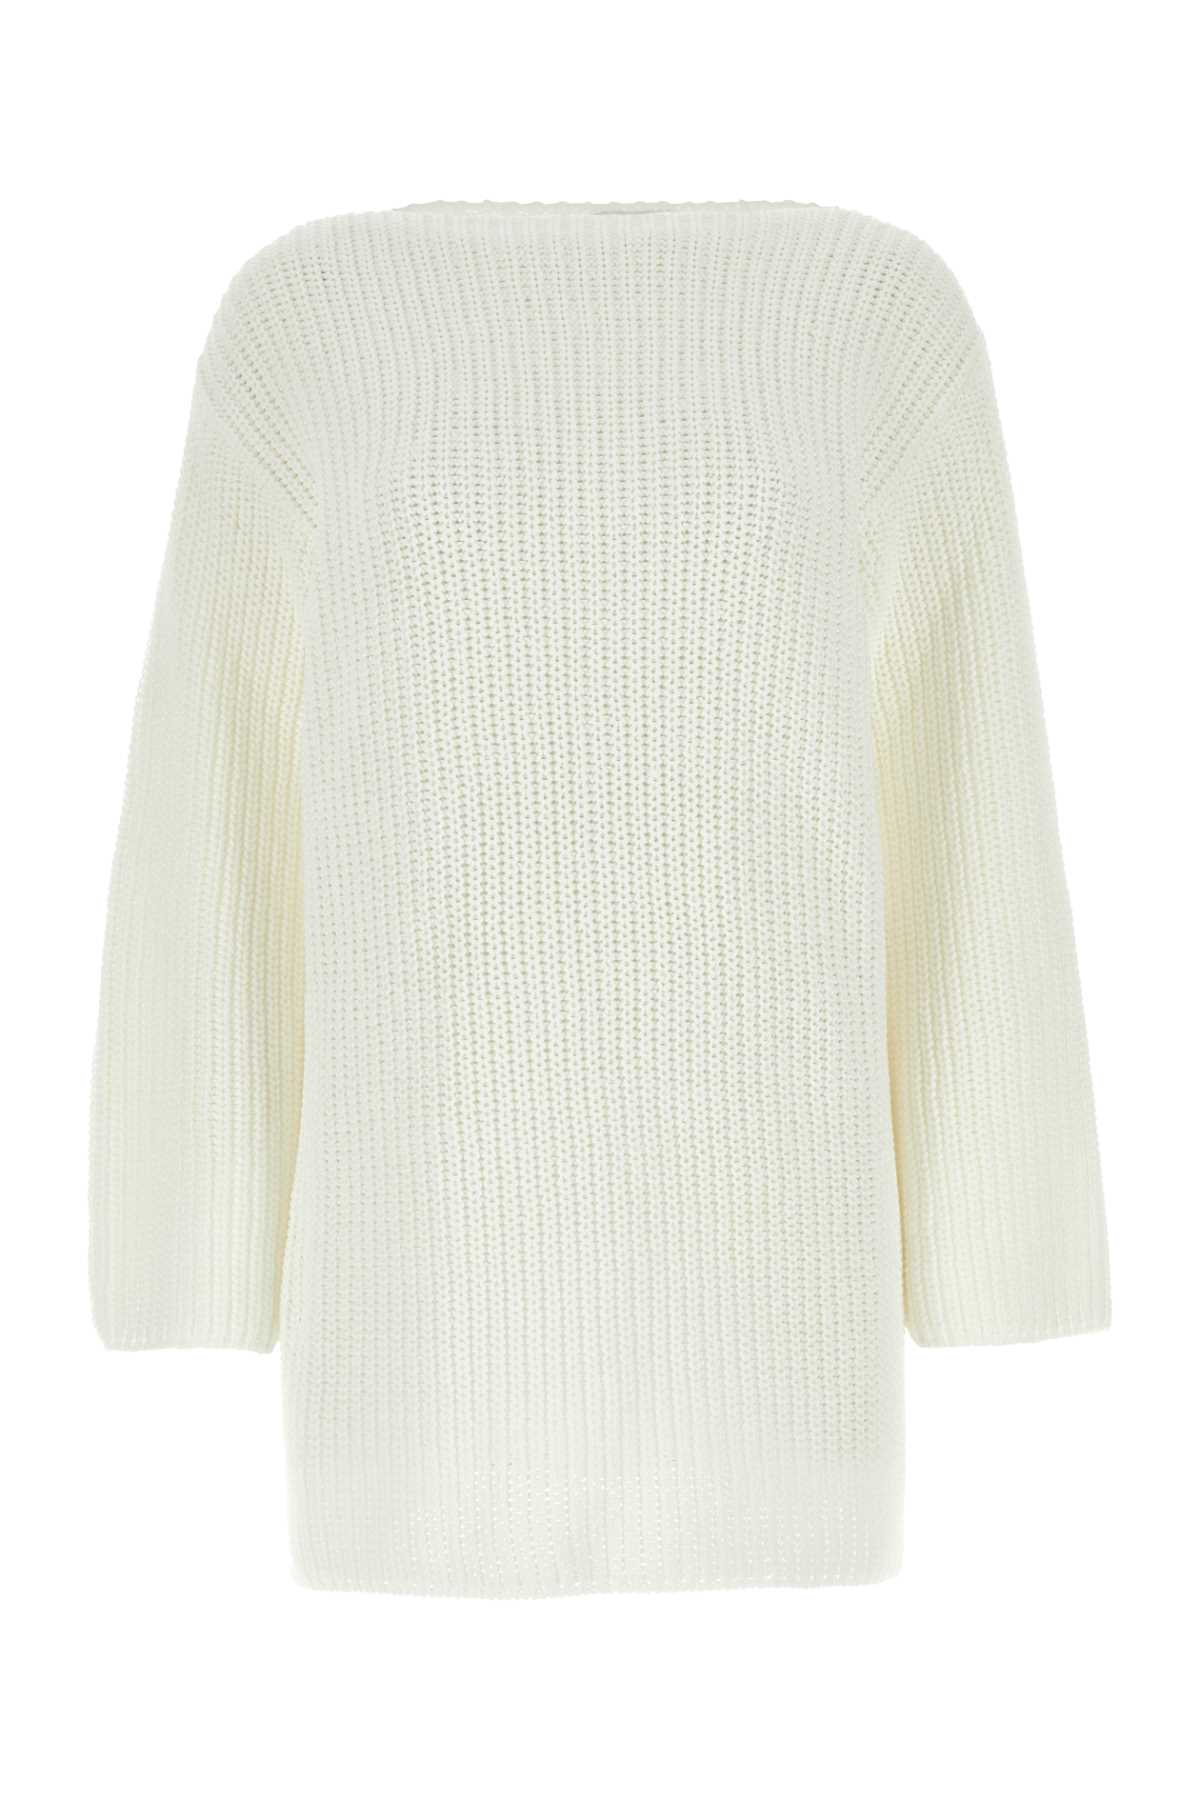 White Cotton Oversize Sweater